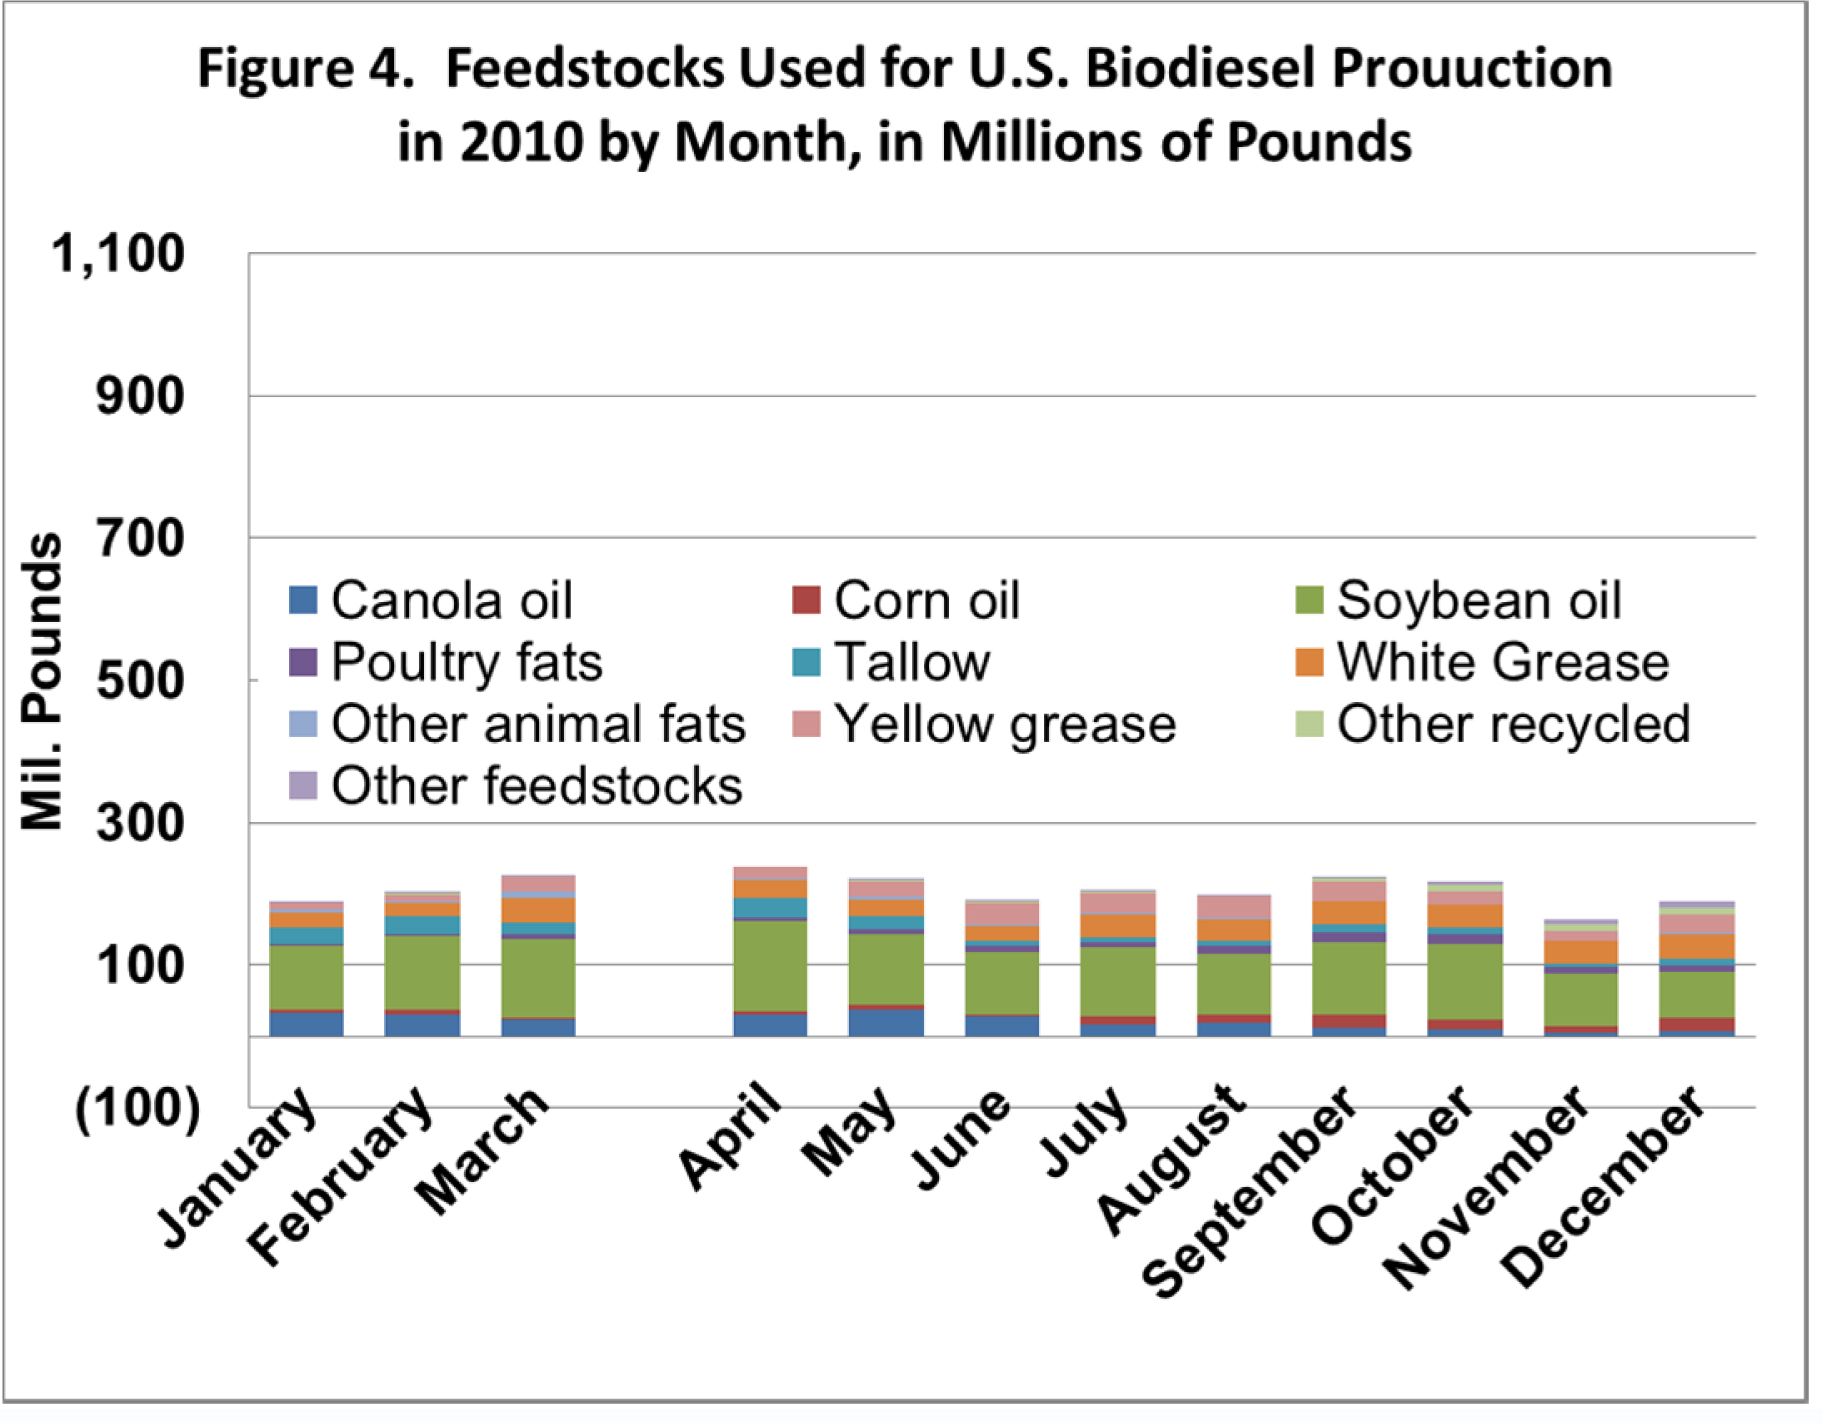 Feedstocks used for U.S. Biodiesel Productionn in 2010